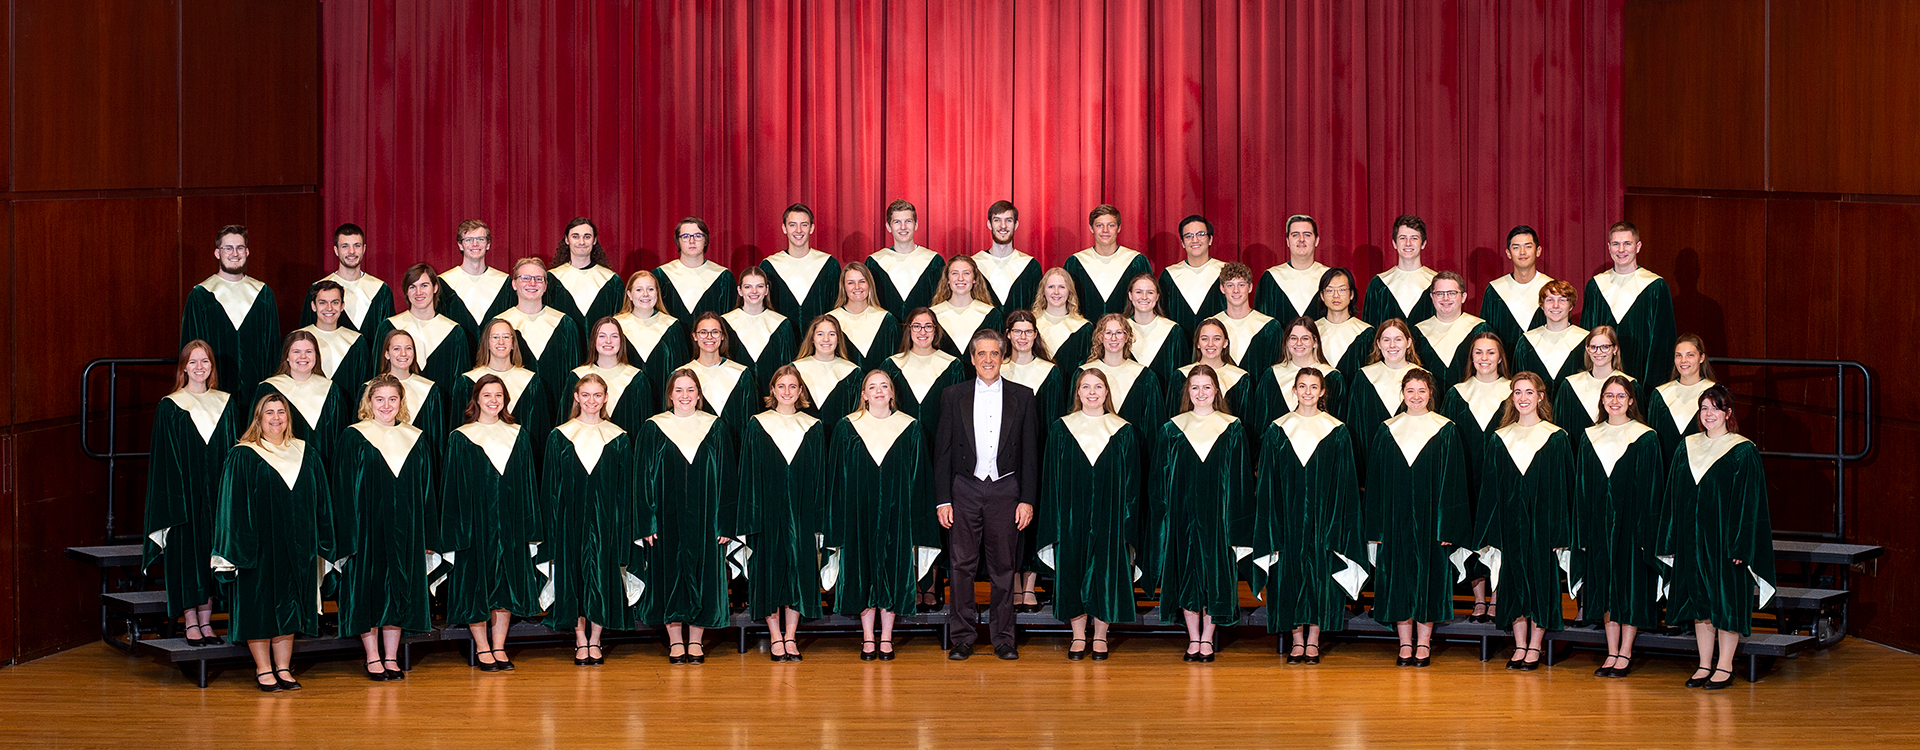 Wisconsin Lutheran Choir group image